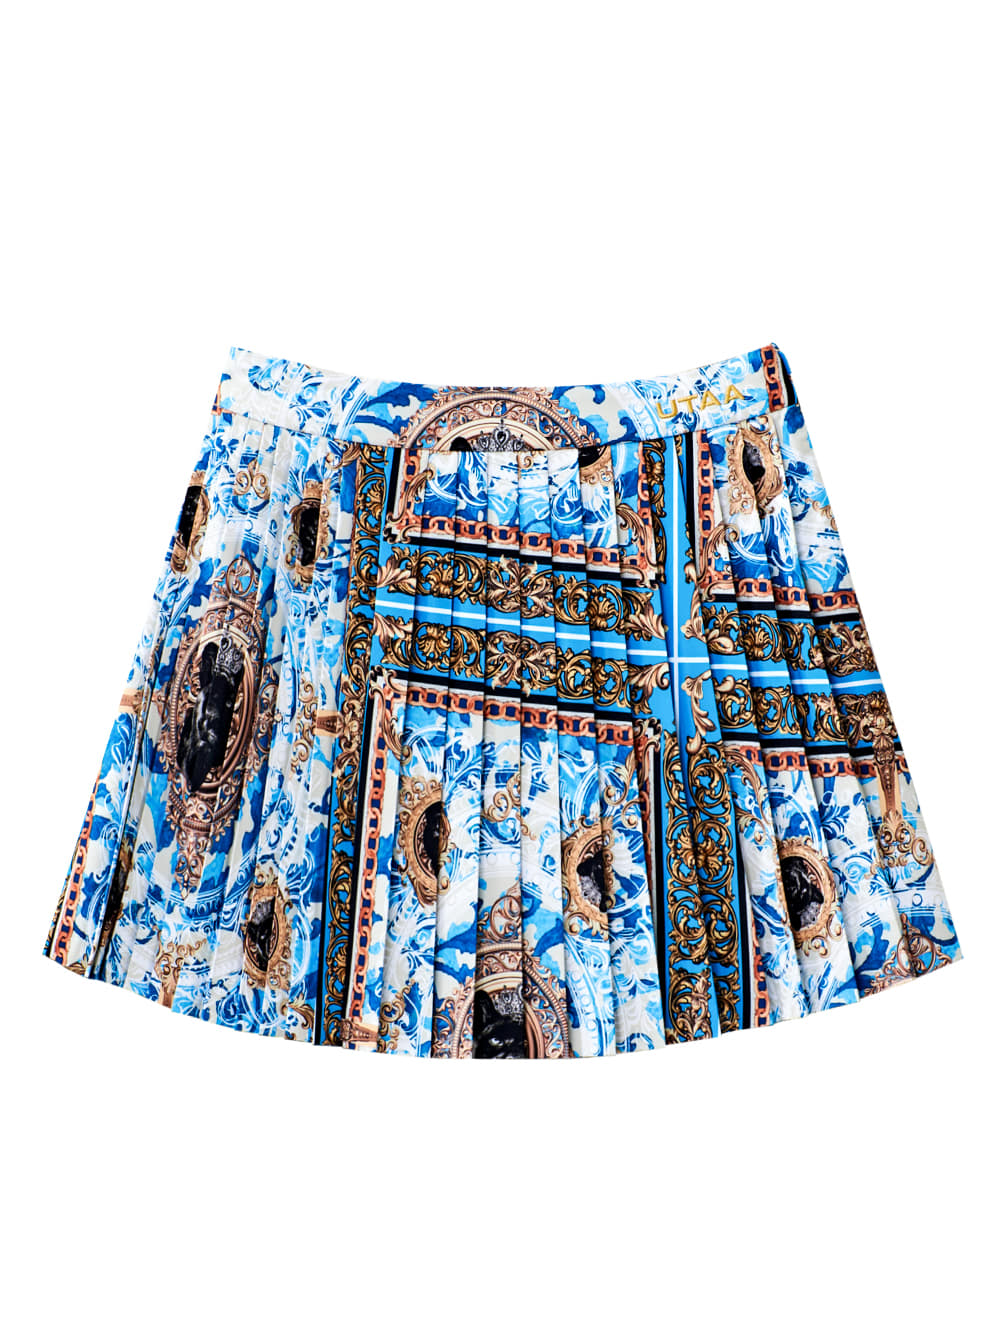 UTAA Neon Buckingham Pleats Skirt : BLUE (UB3SKF271BL)